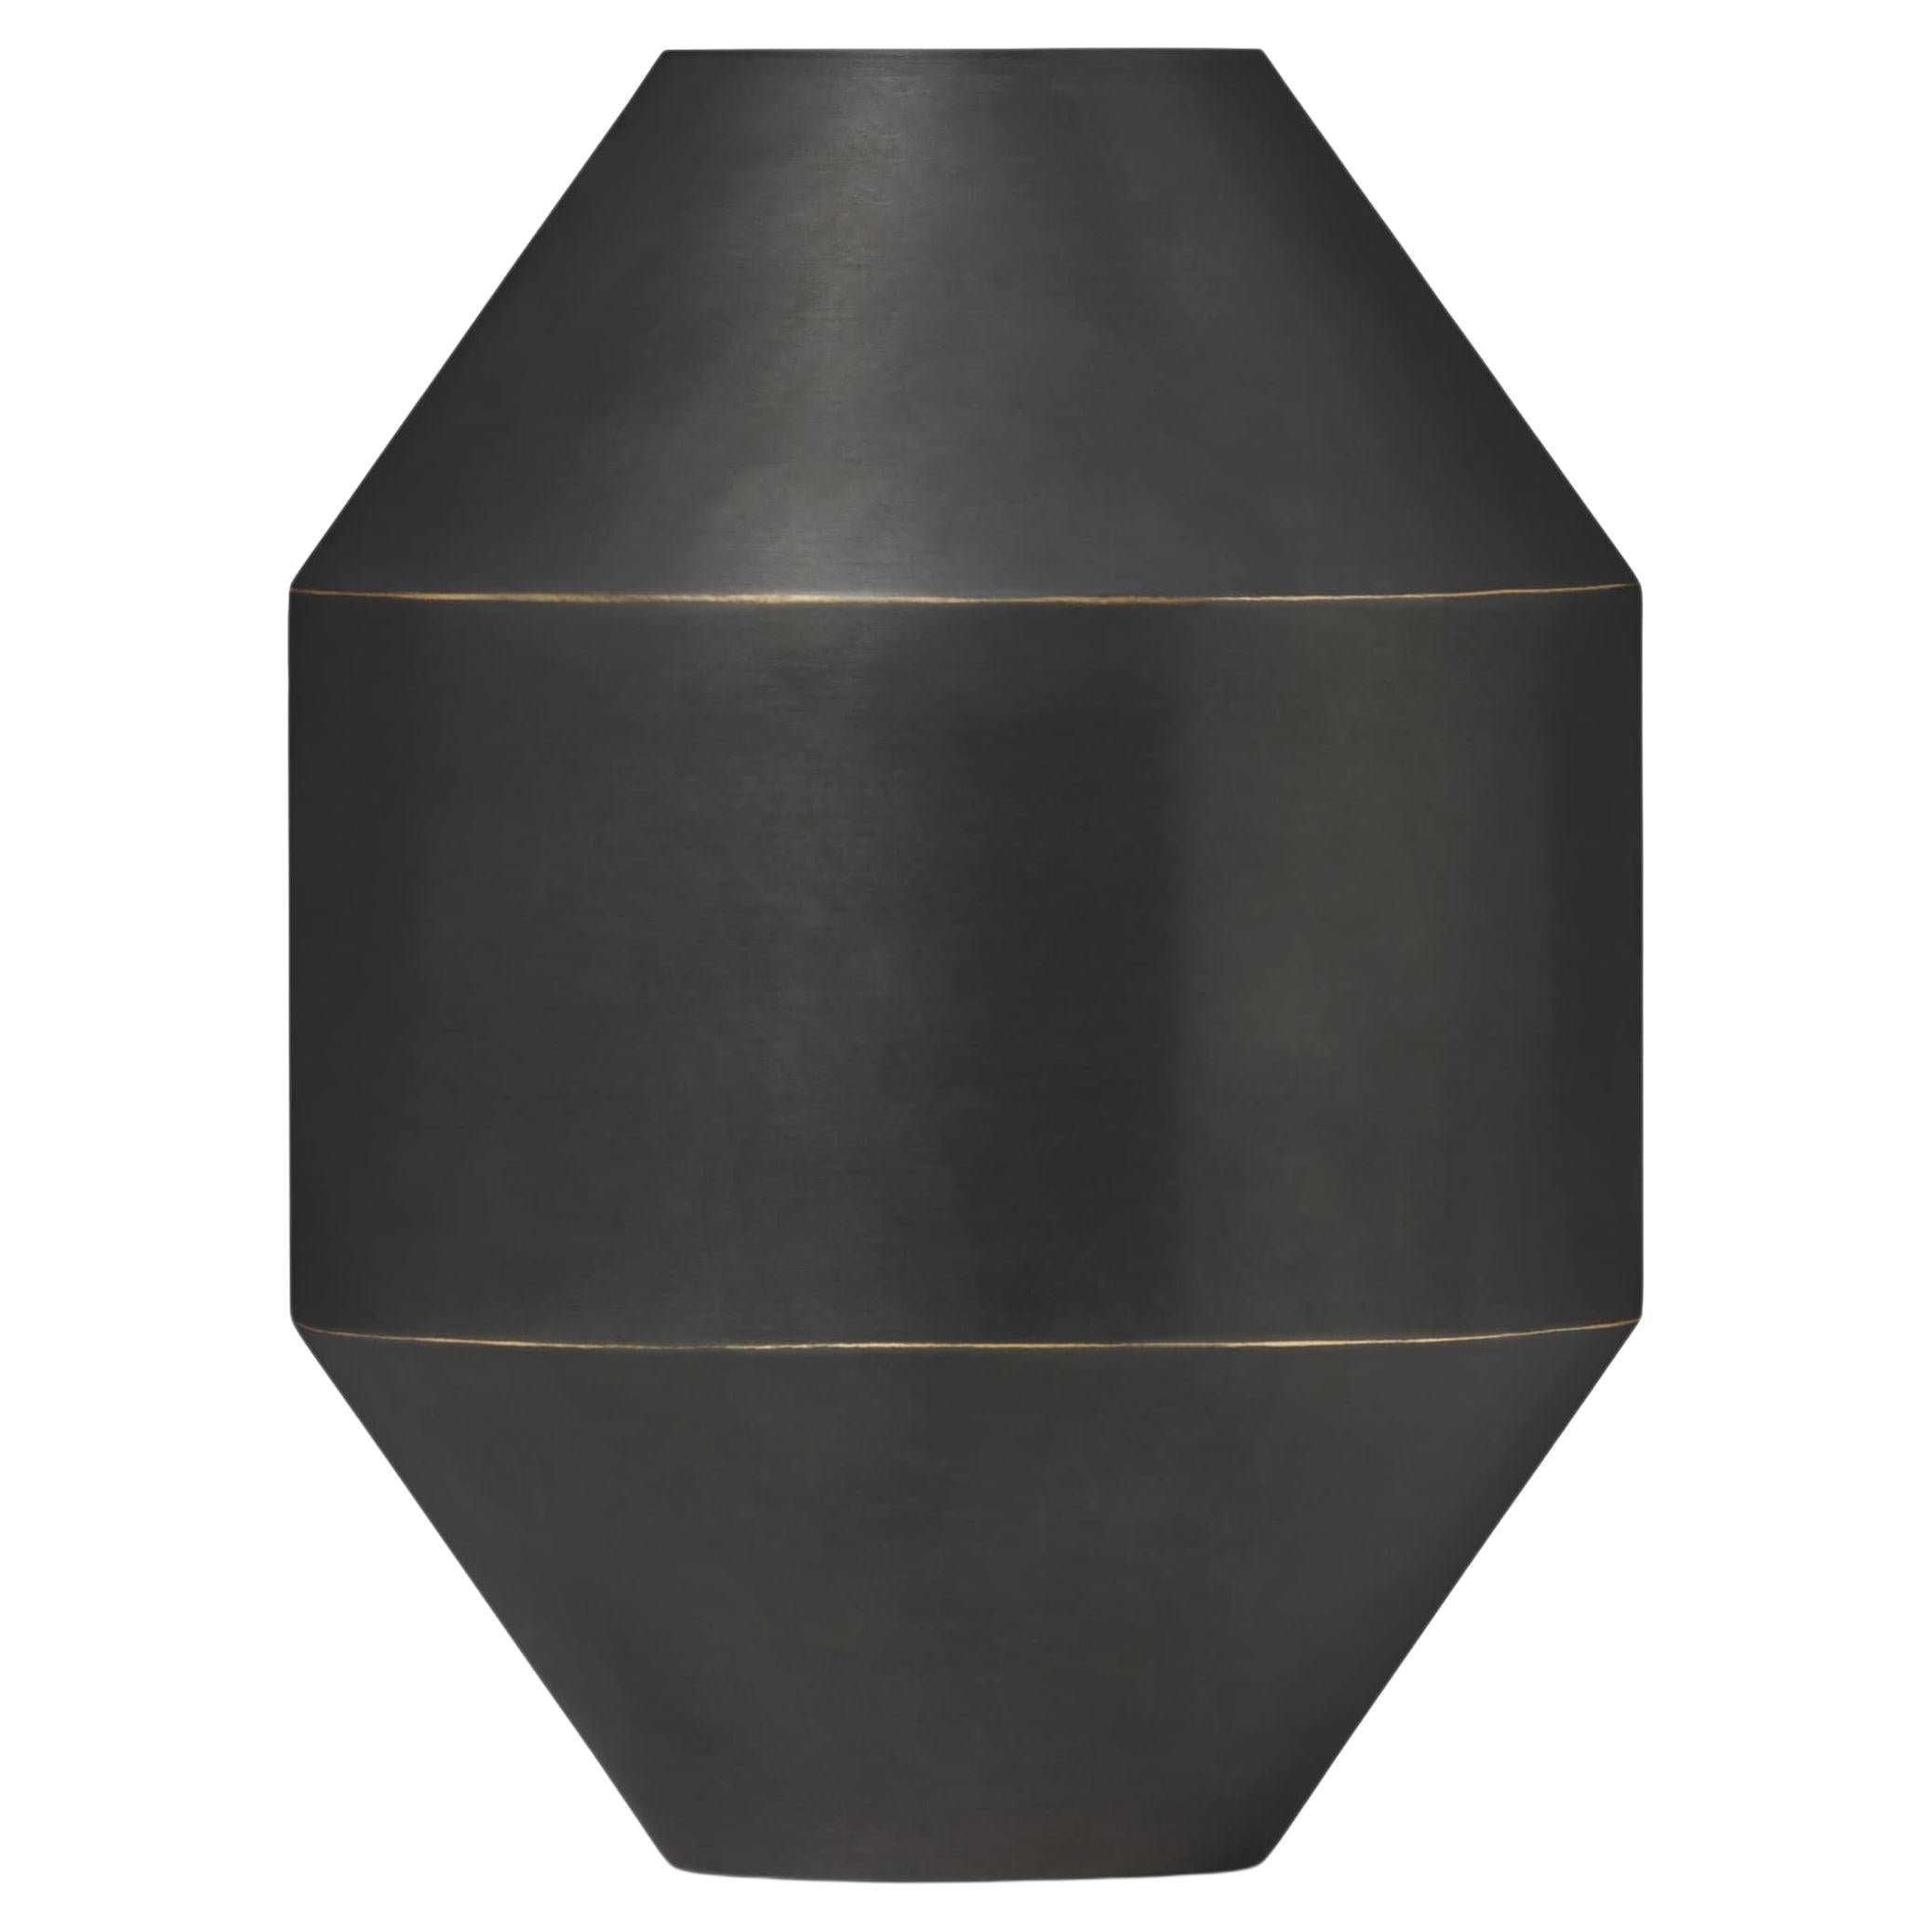  Hydro Vase H20 Black-Oxide Brass by Sofie Østerby for Fredericia